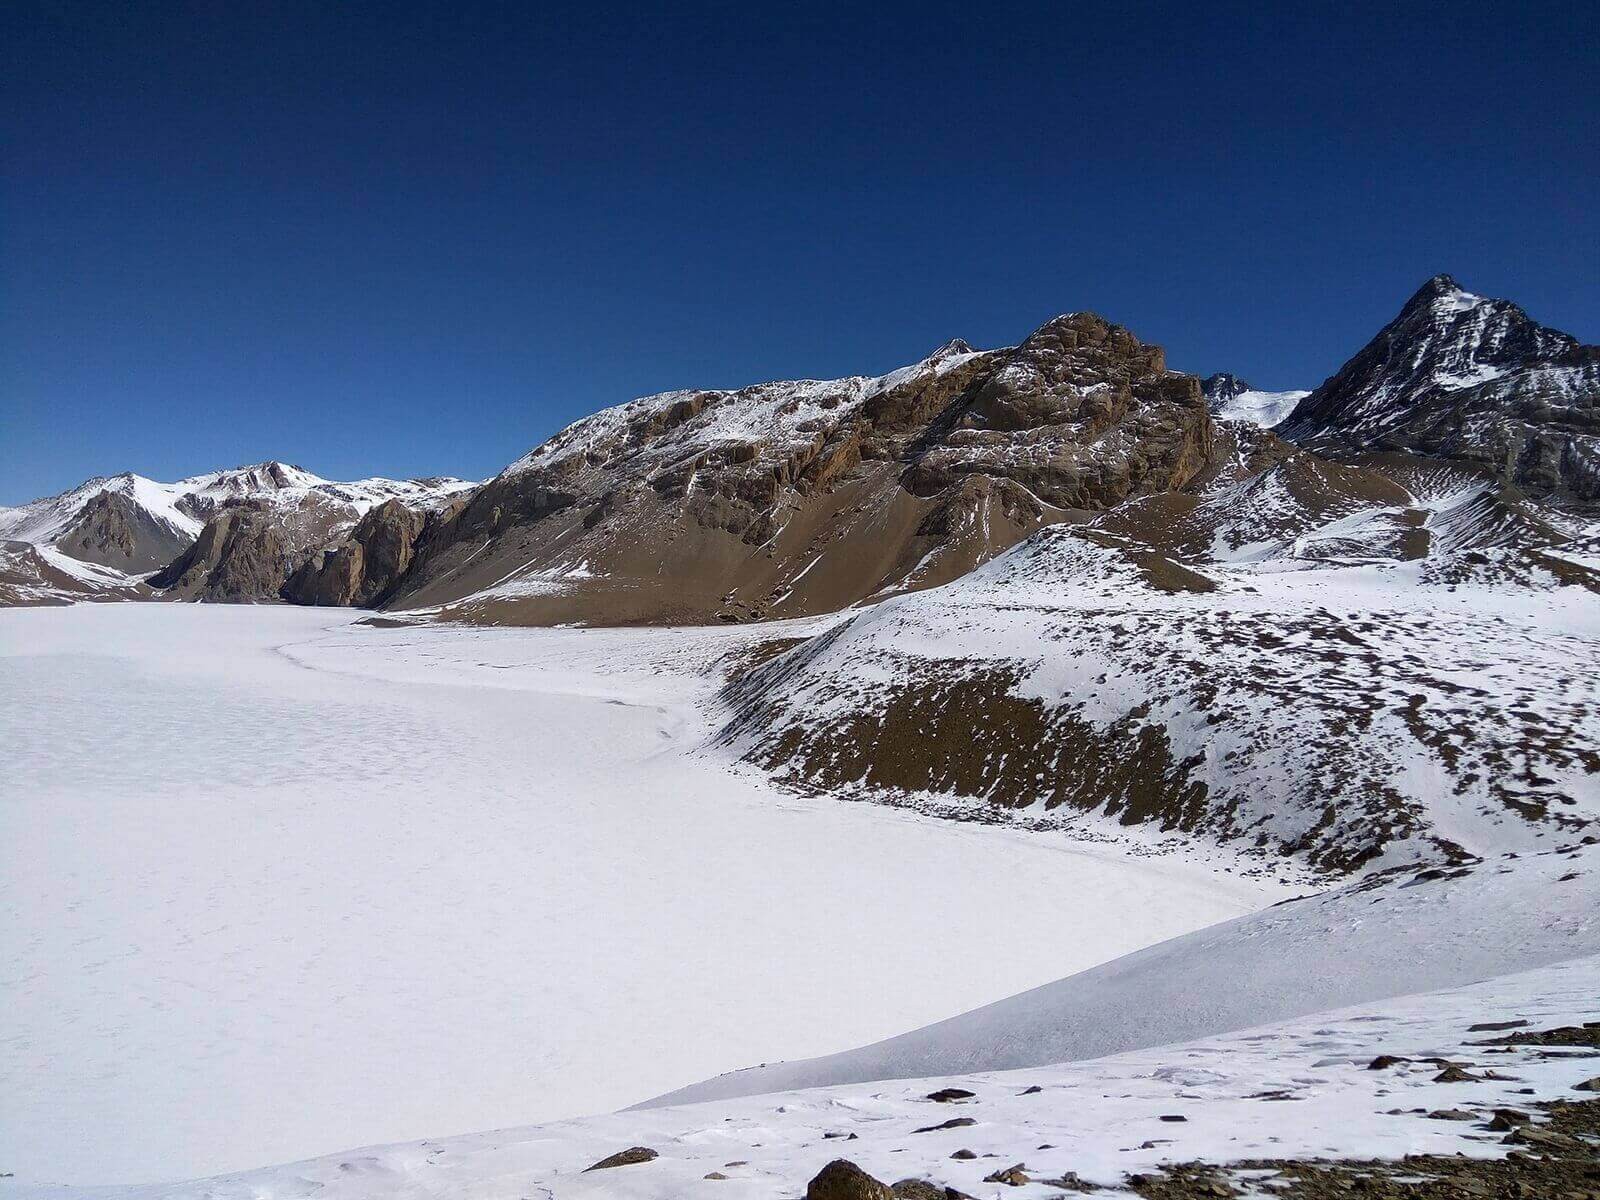 Annapurna Circuit vs Everest Base Camp